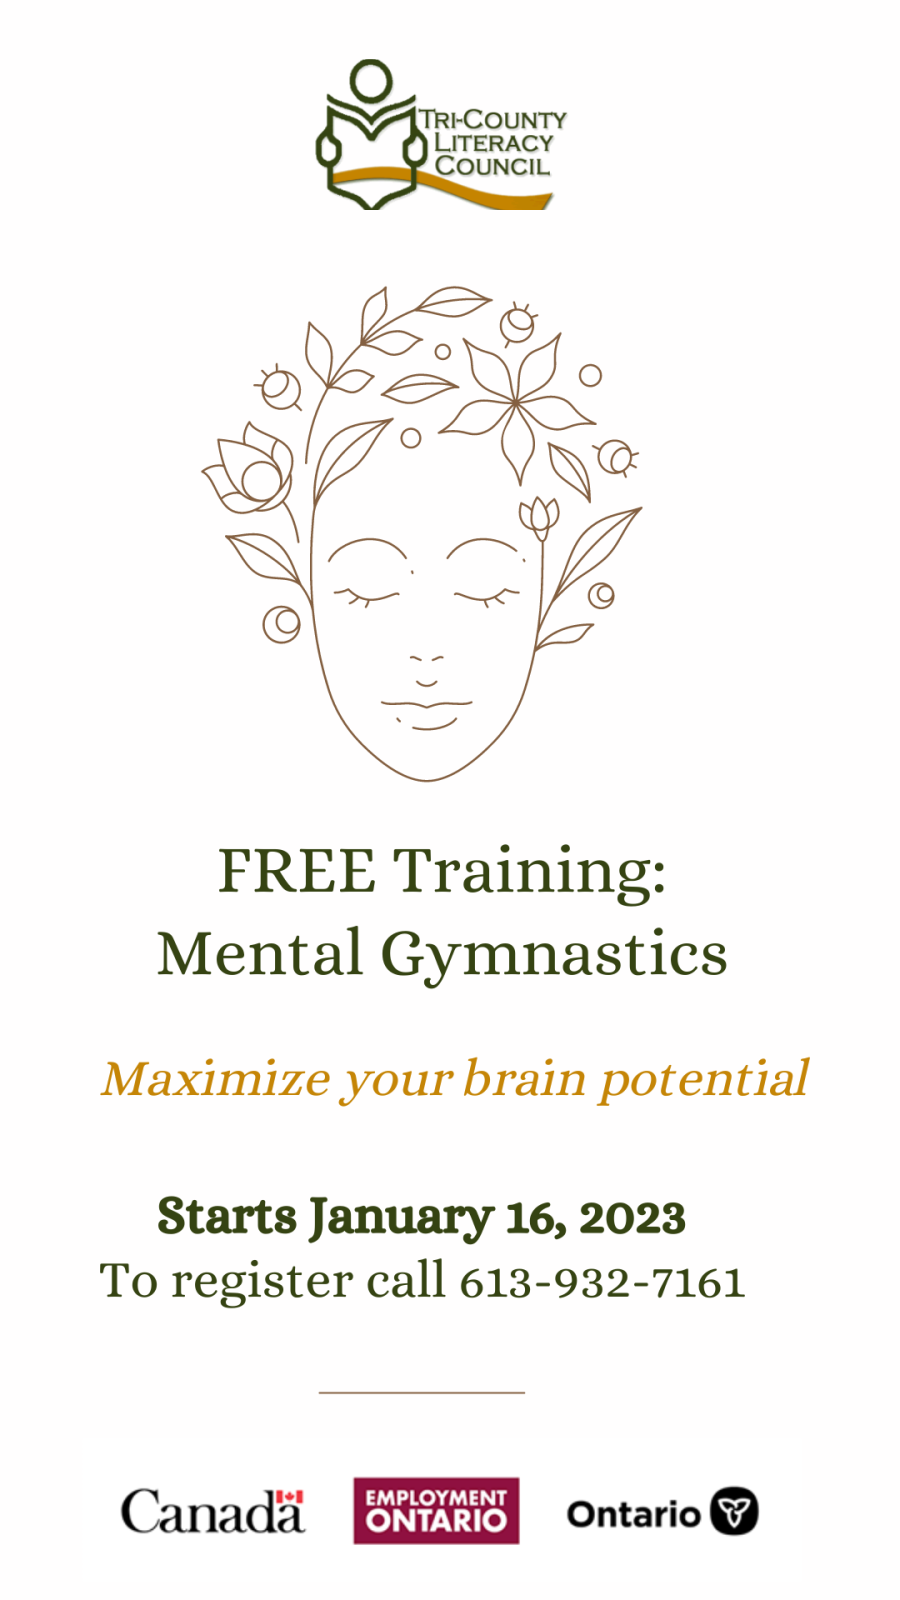 Free Training: Mental Gymnastics for Everyone